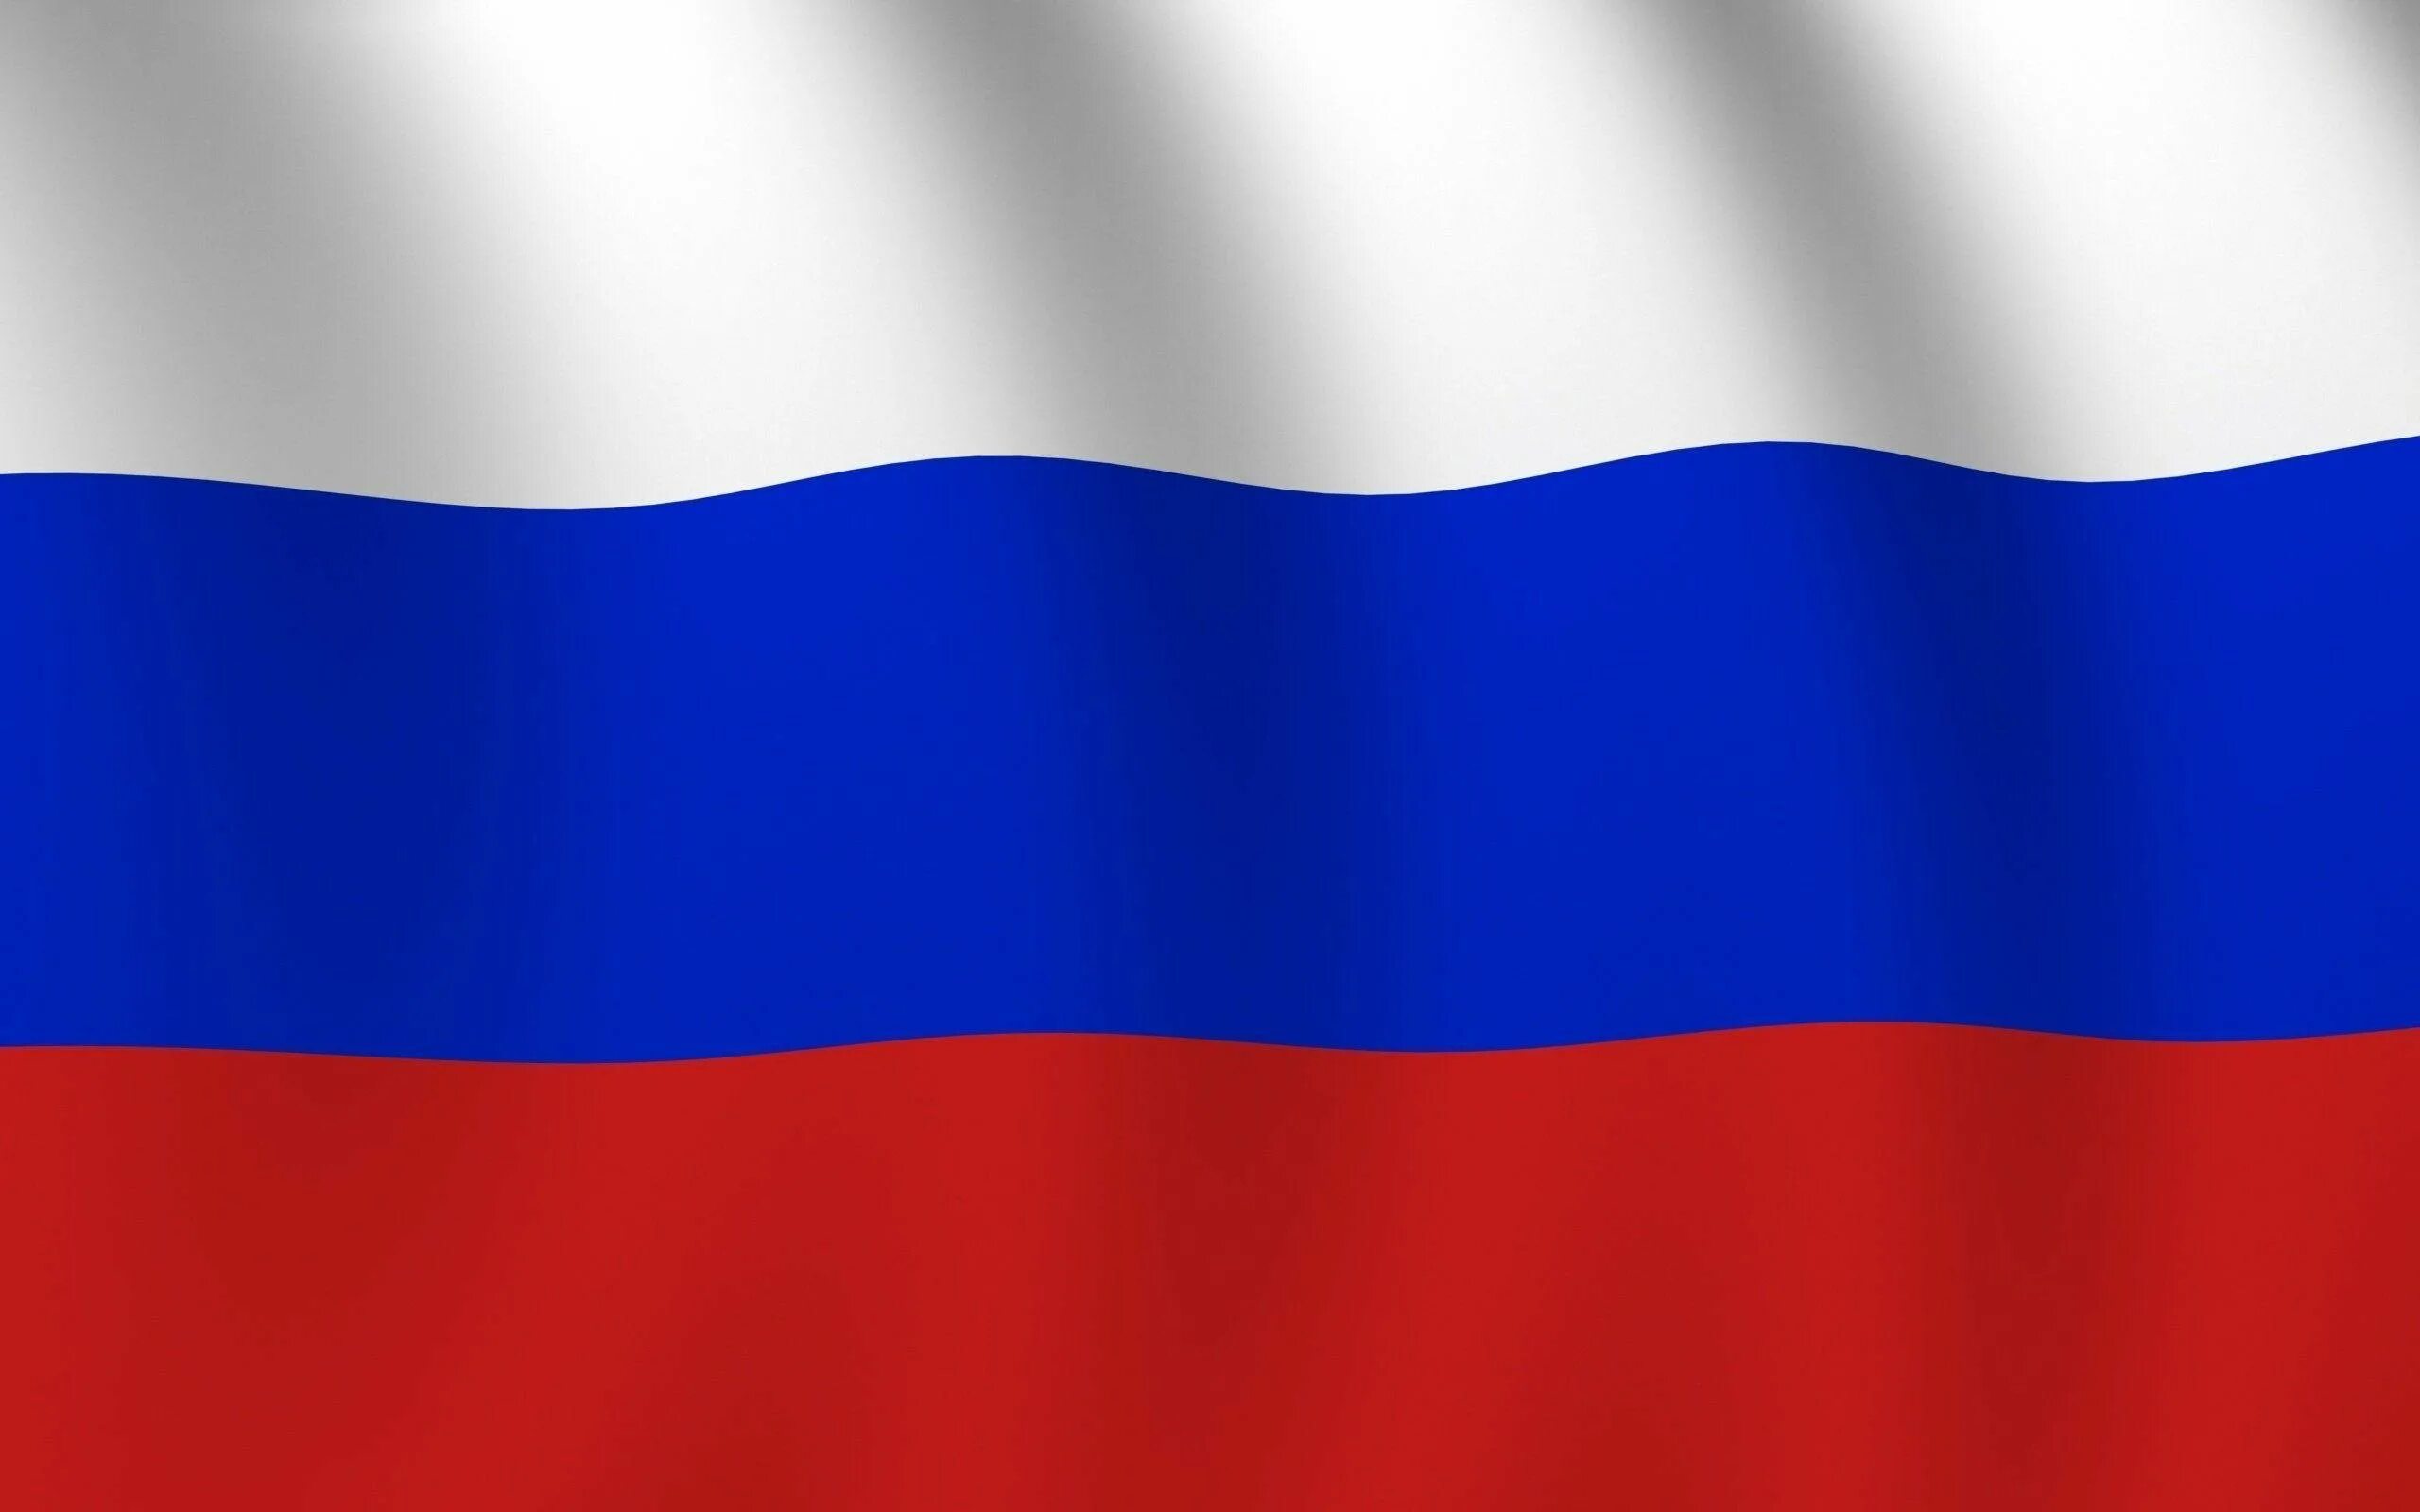 Флаг России. Флаг Триколор России. Ф̆̈л̆̈ӑ̈г̆̈ Р̆̈о̆сси й̈. ГДАГ России.